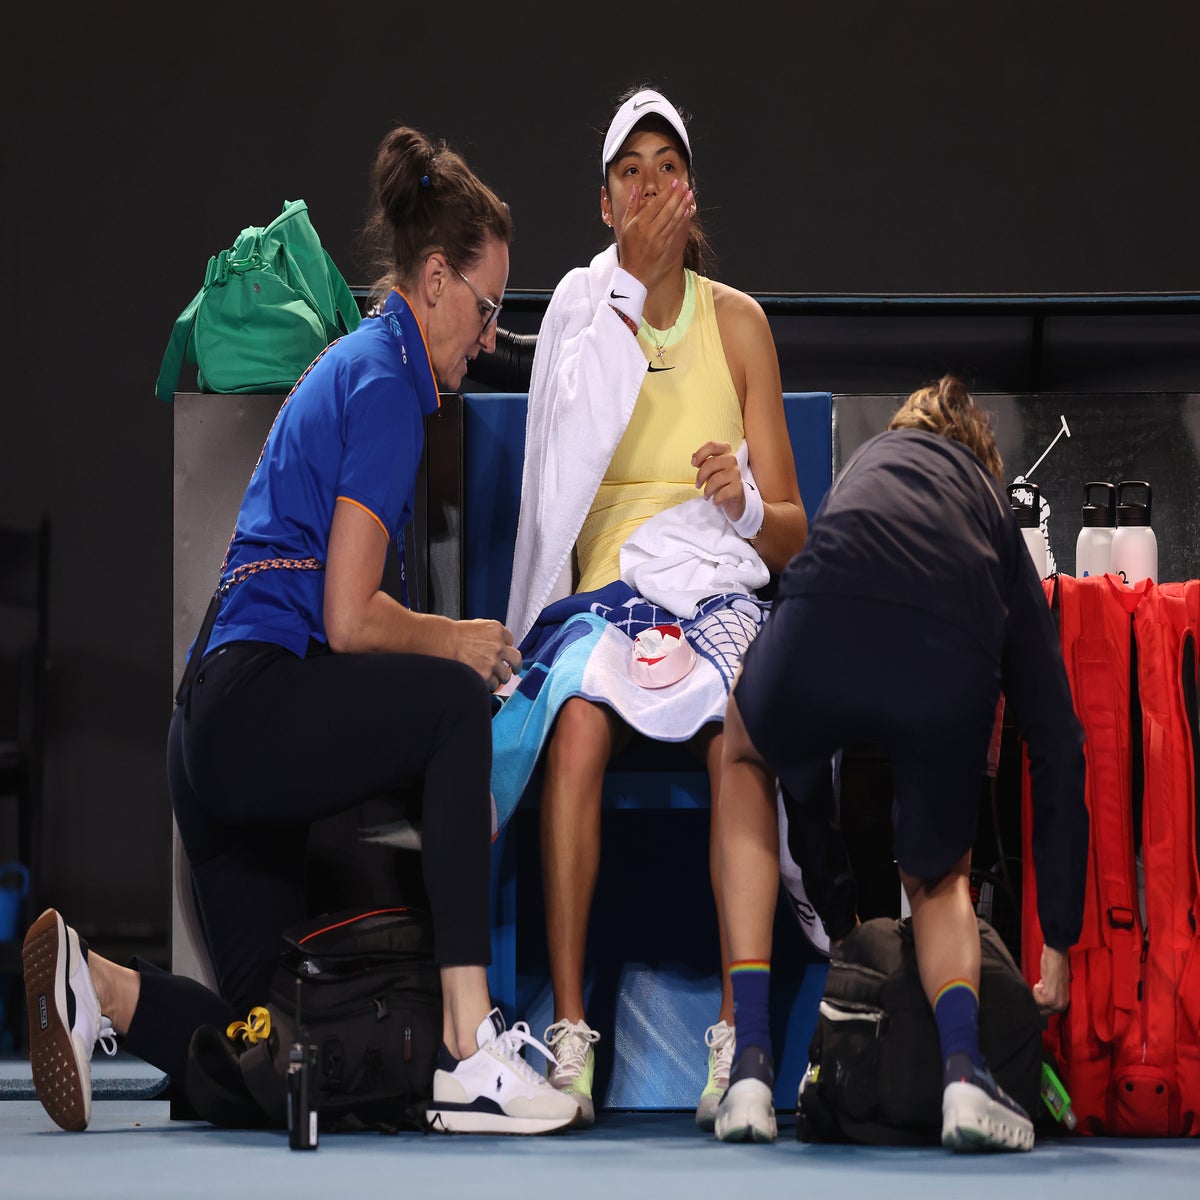 Emma Raducanu was 'throwing up in mouth' during Australian Open